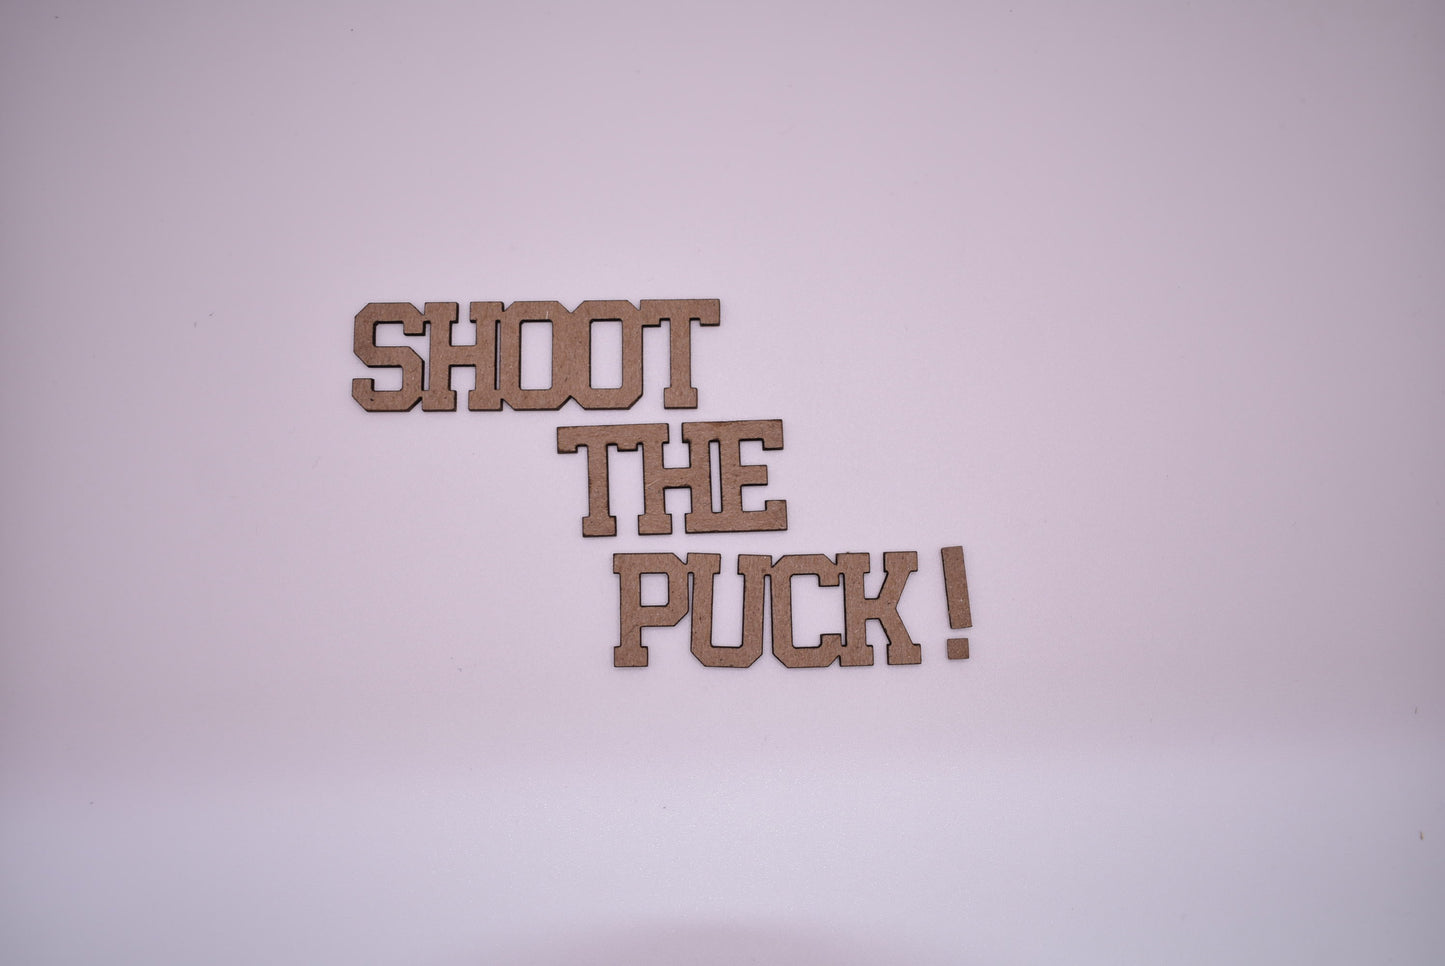 Shoot the puck! - Creative Designs By Kari